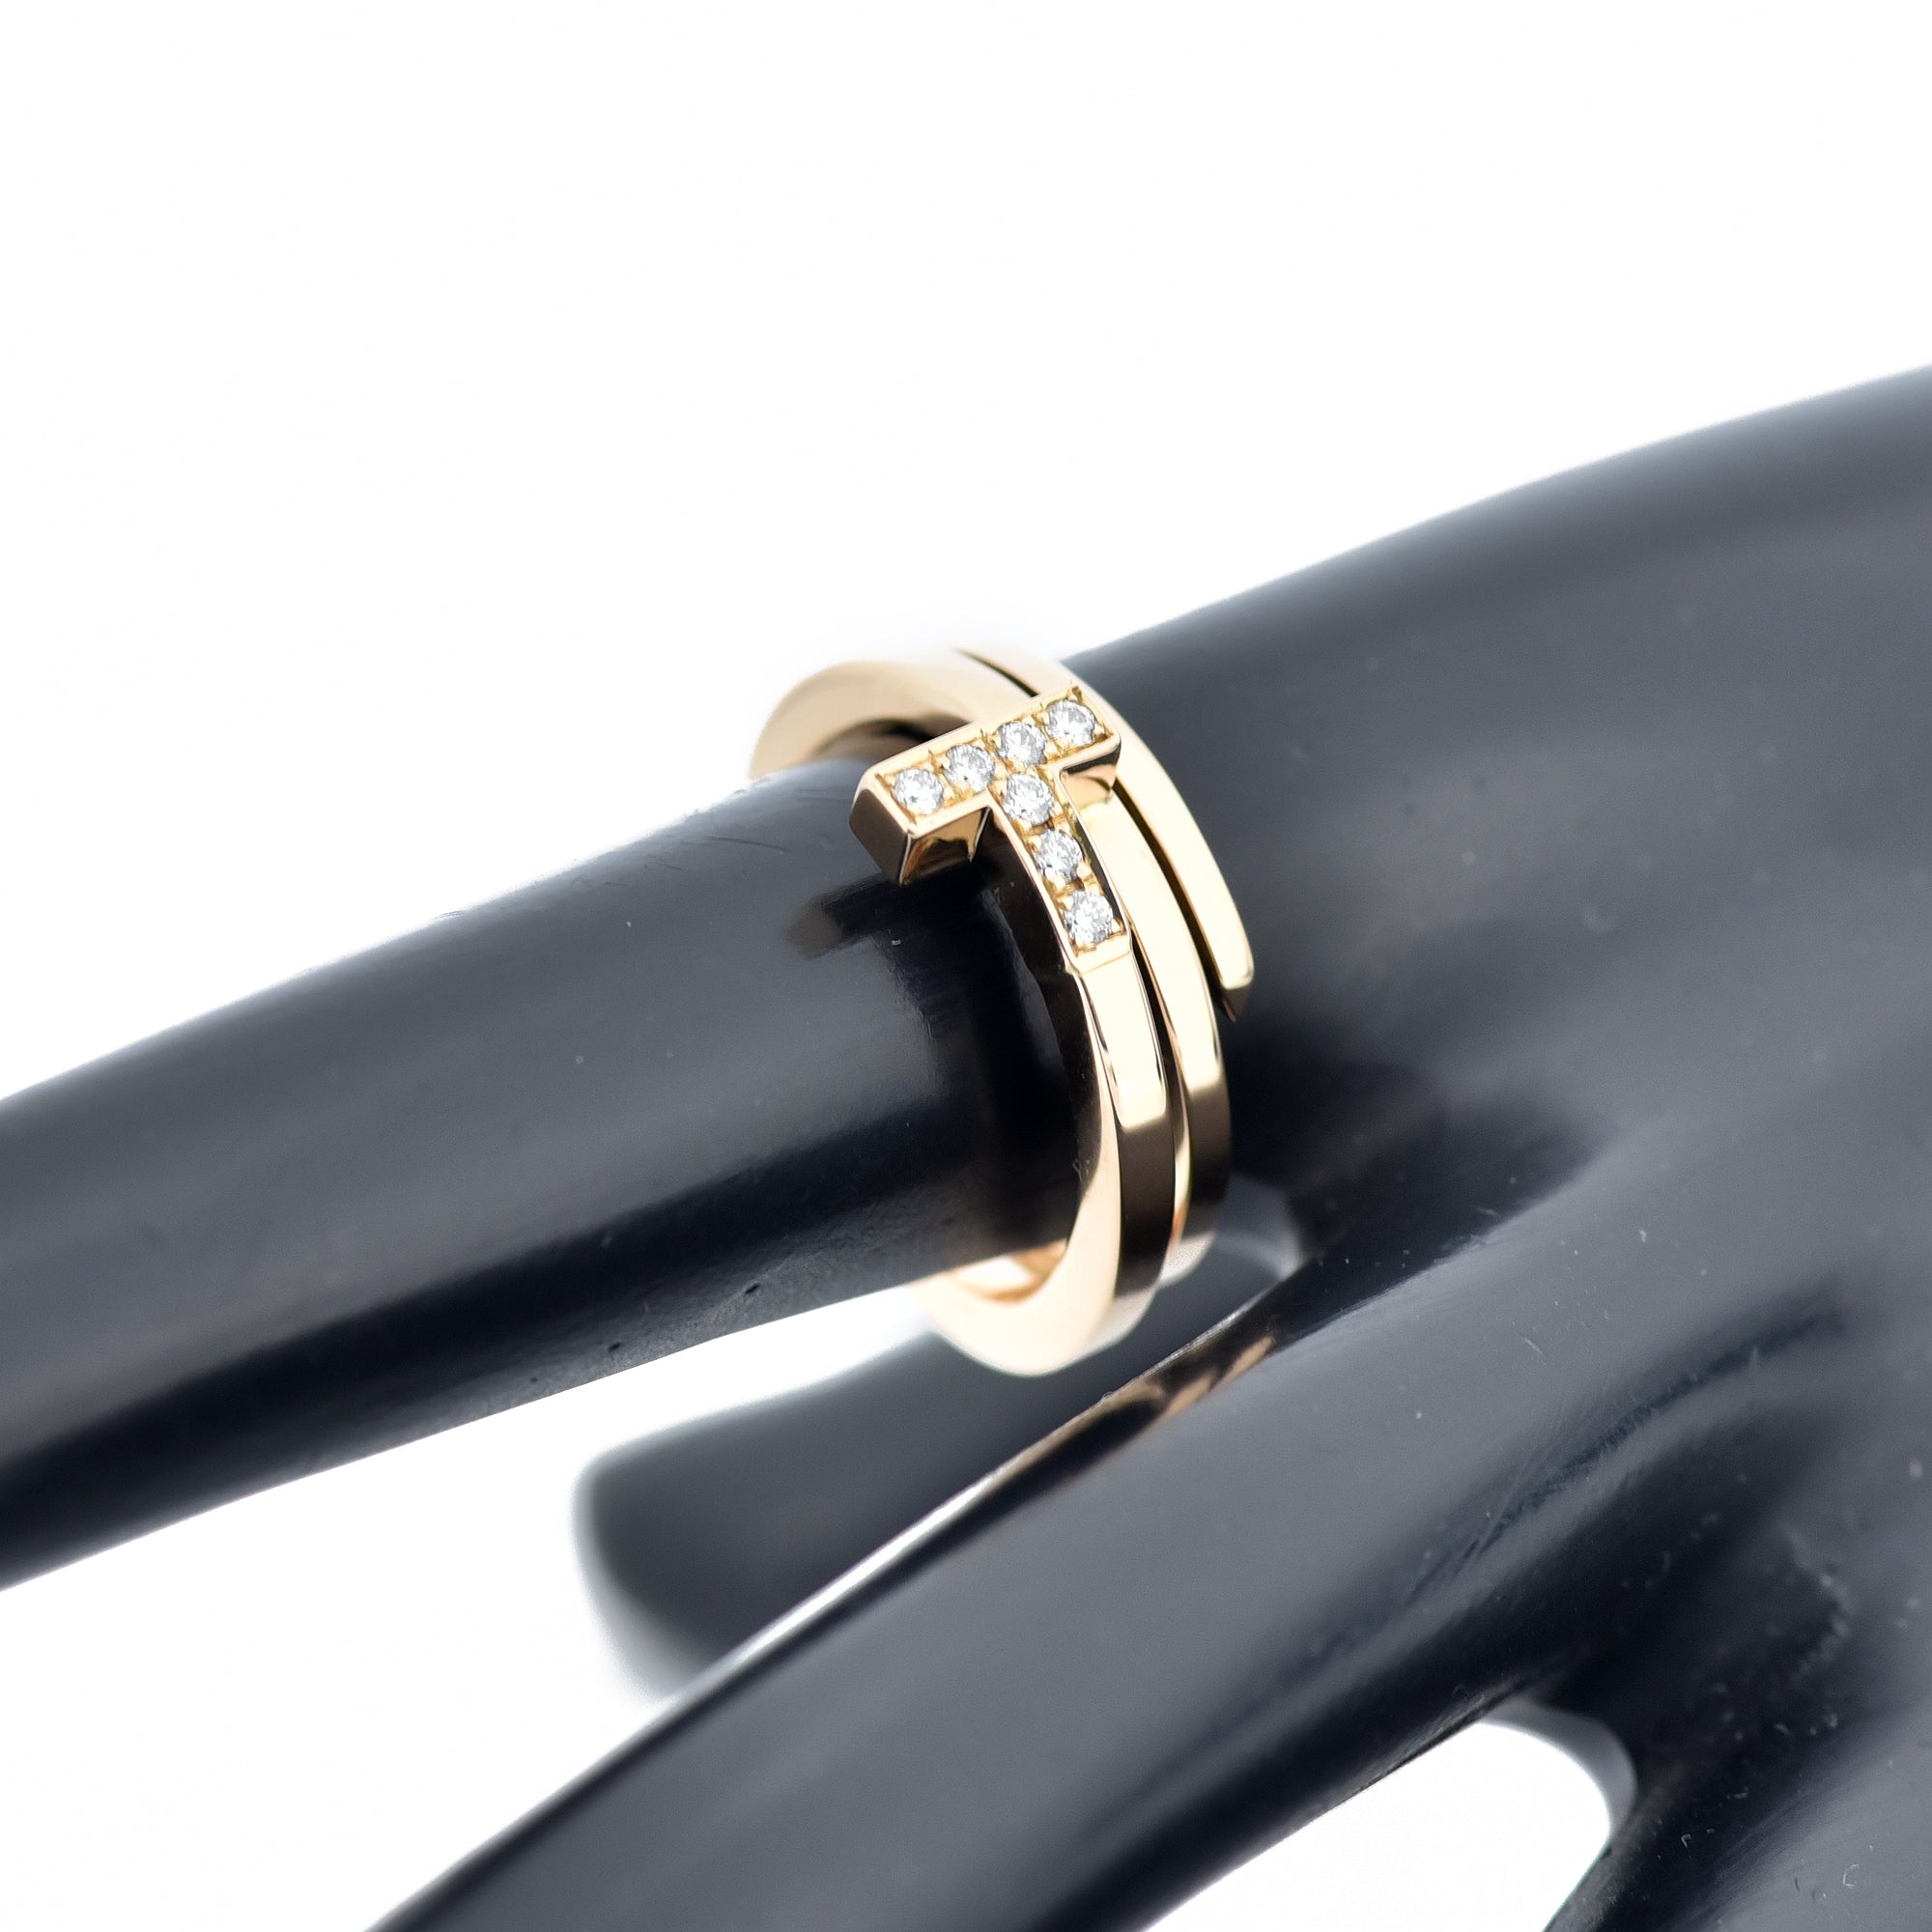 Inspired Tiffany T Two Narrow Ring in 18k Rose Gold with Pavé Diamonds |  Narrow ring, Tiffany jewelry, Tiffany t